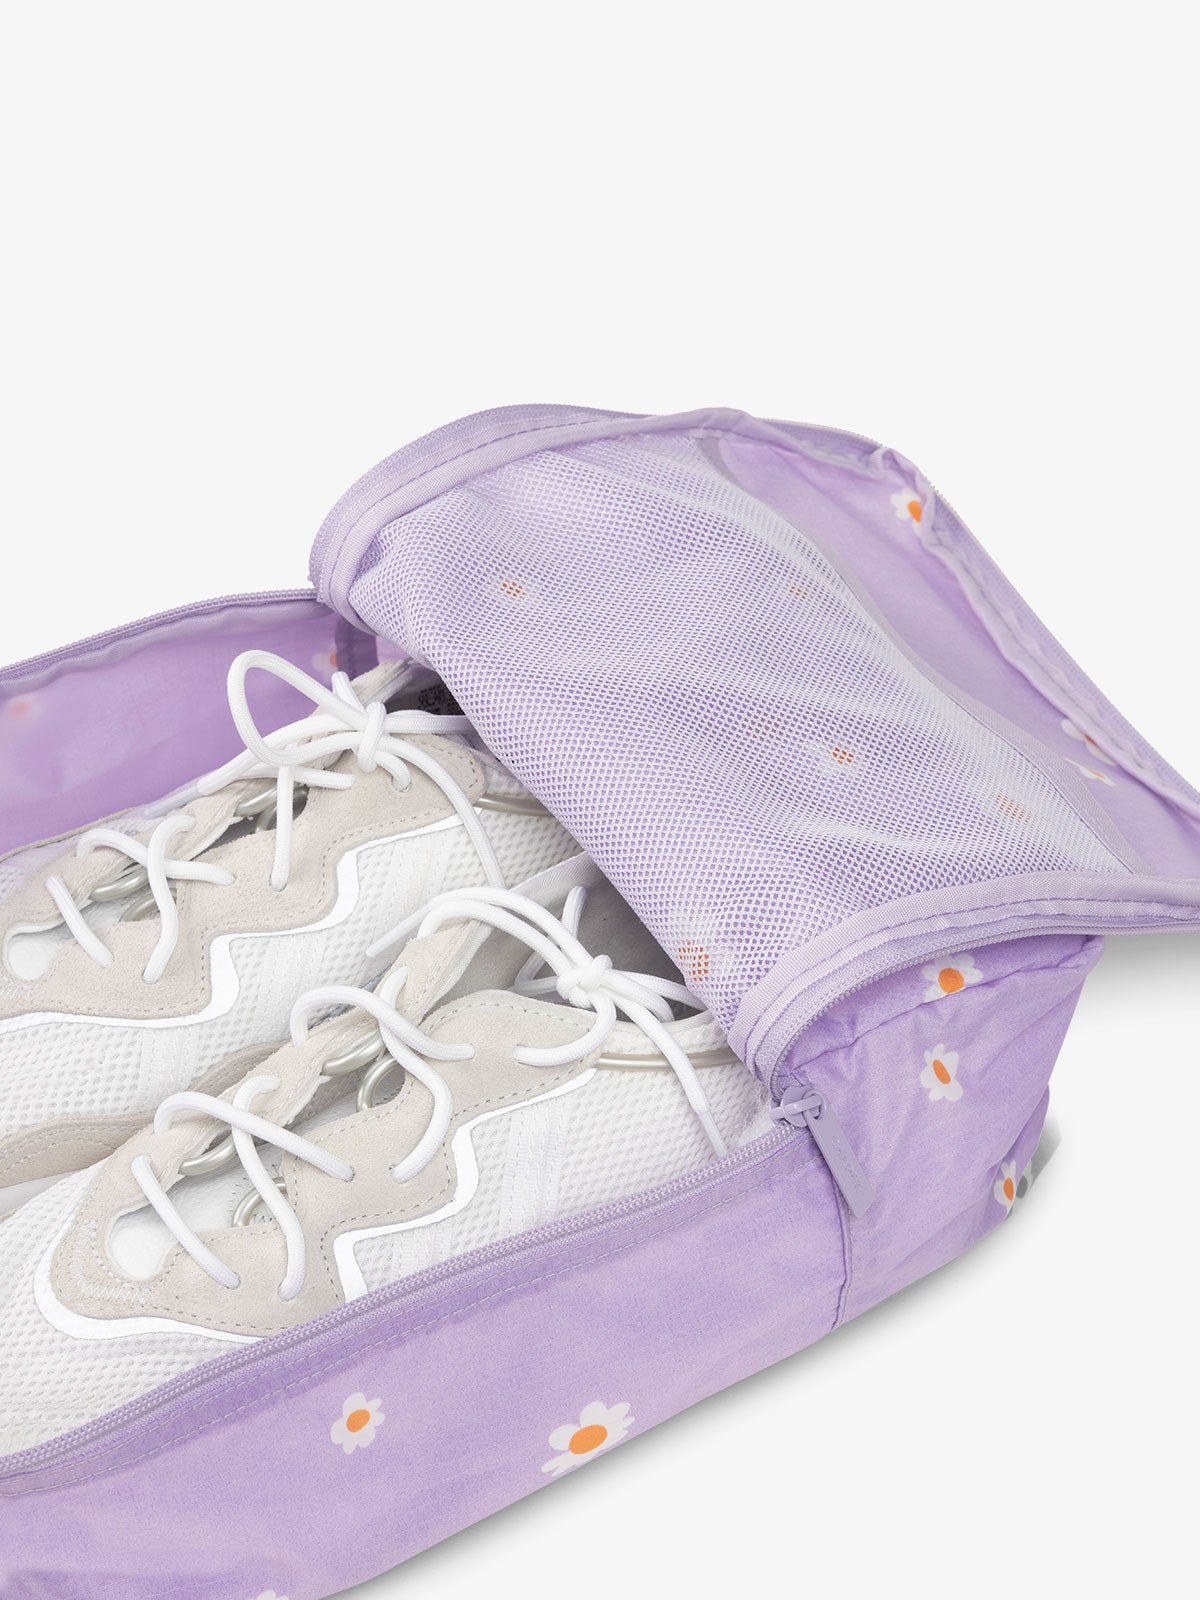 CALPAK Compakt zippered shoe travel bag with mesh pocket in purple floral print